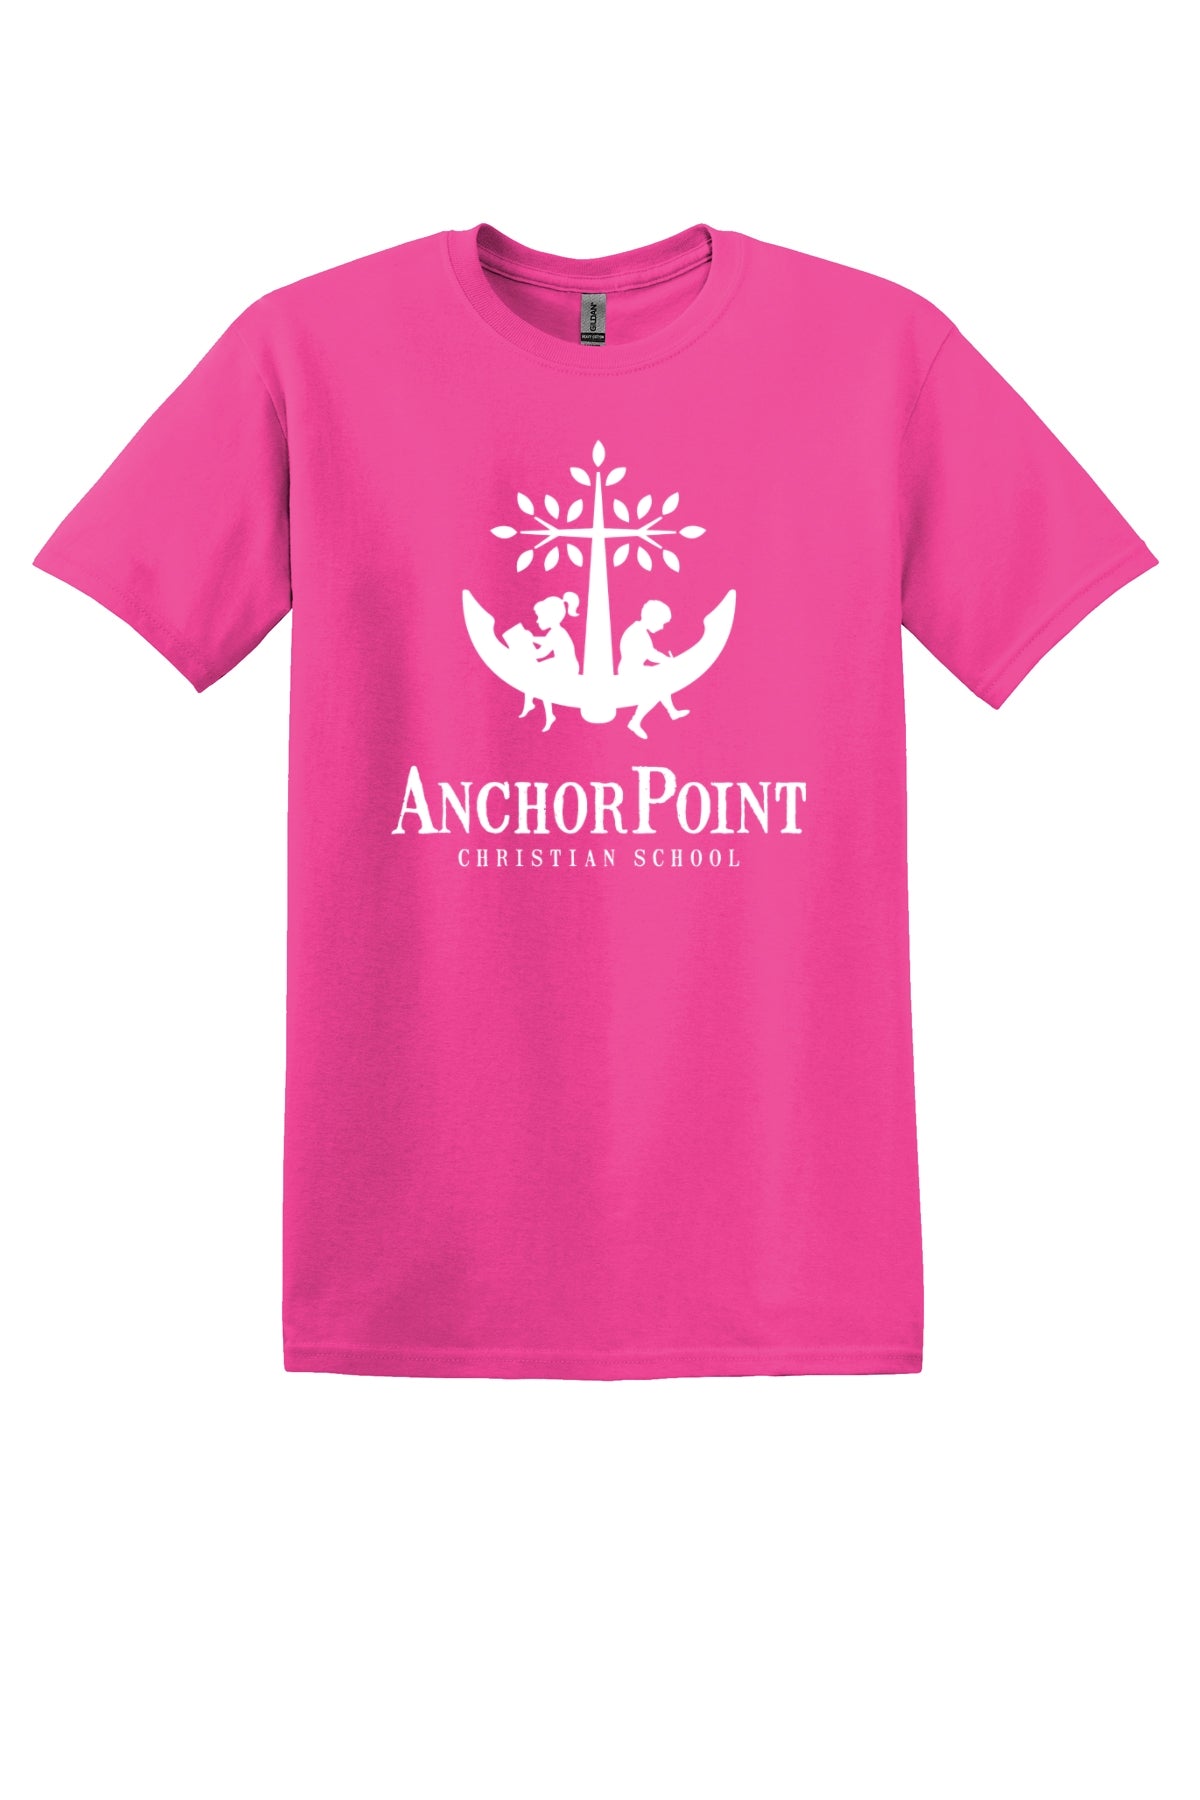 Anchor Point Tee Shirt 5000 Option 1